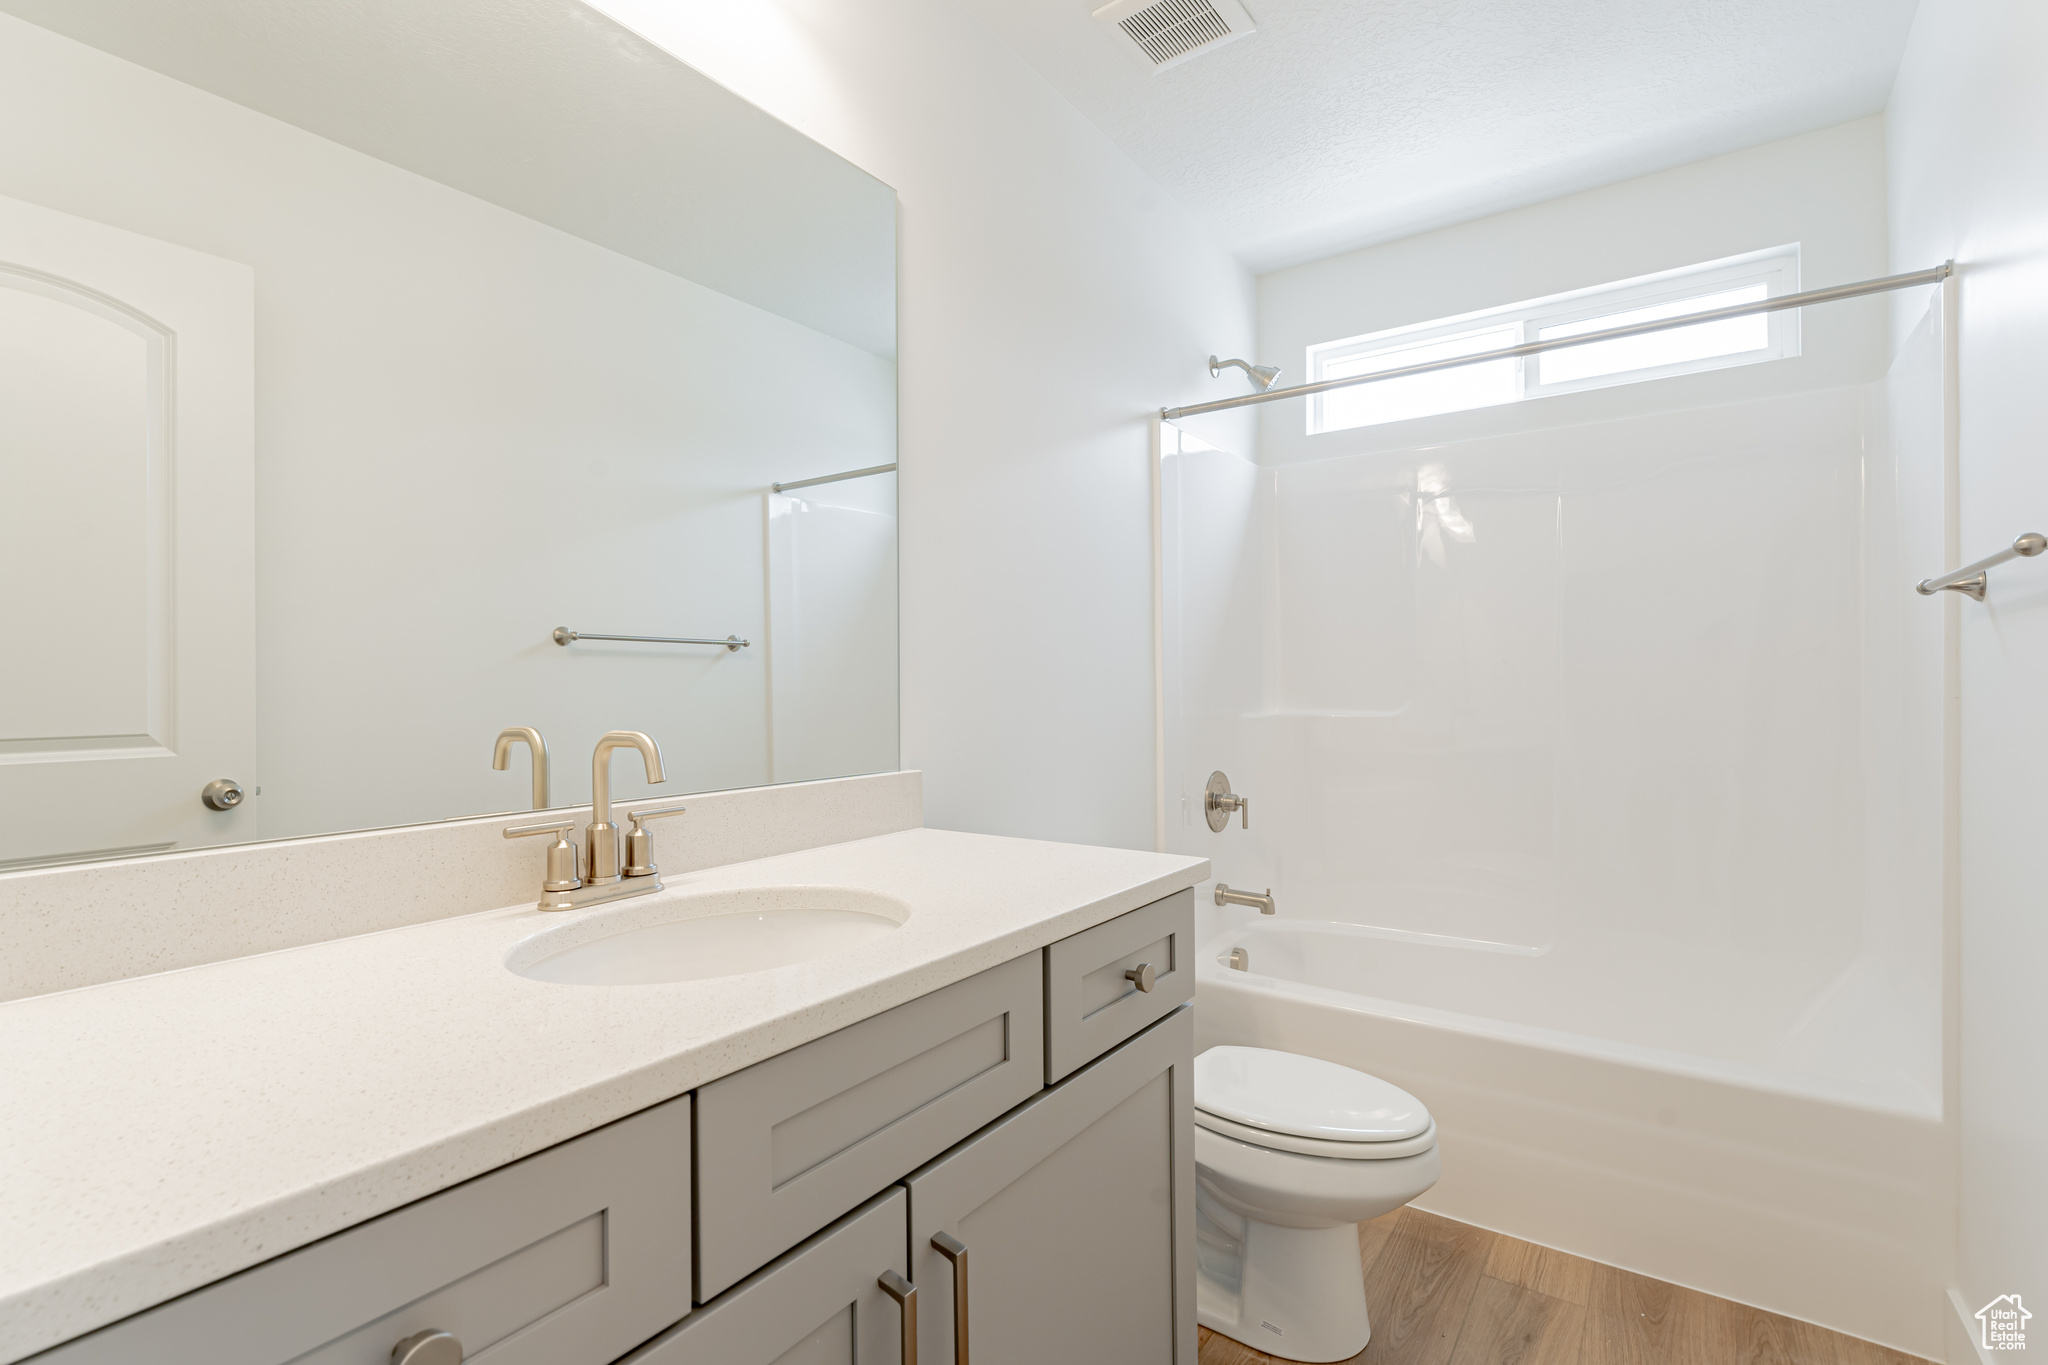 Full bathroom with bathtub / shower combination, toilet, vanity, and hardwood / wood-style flooring